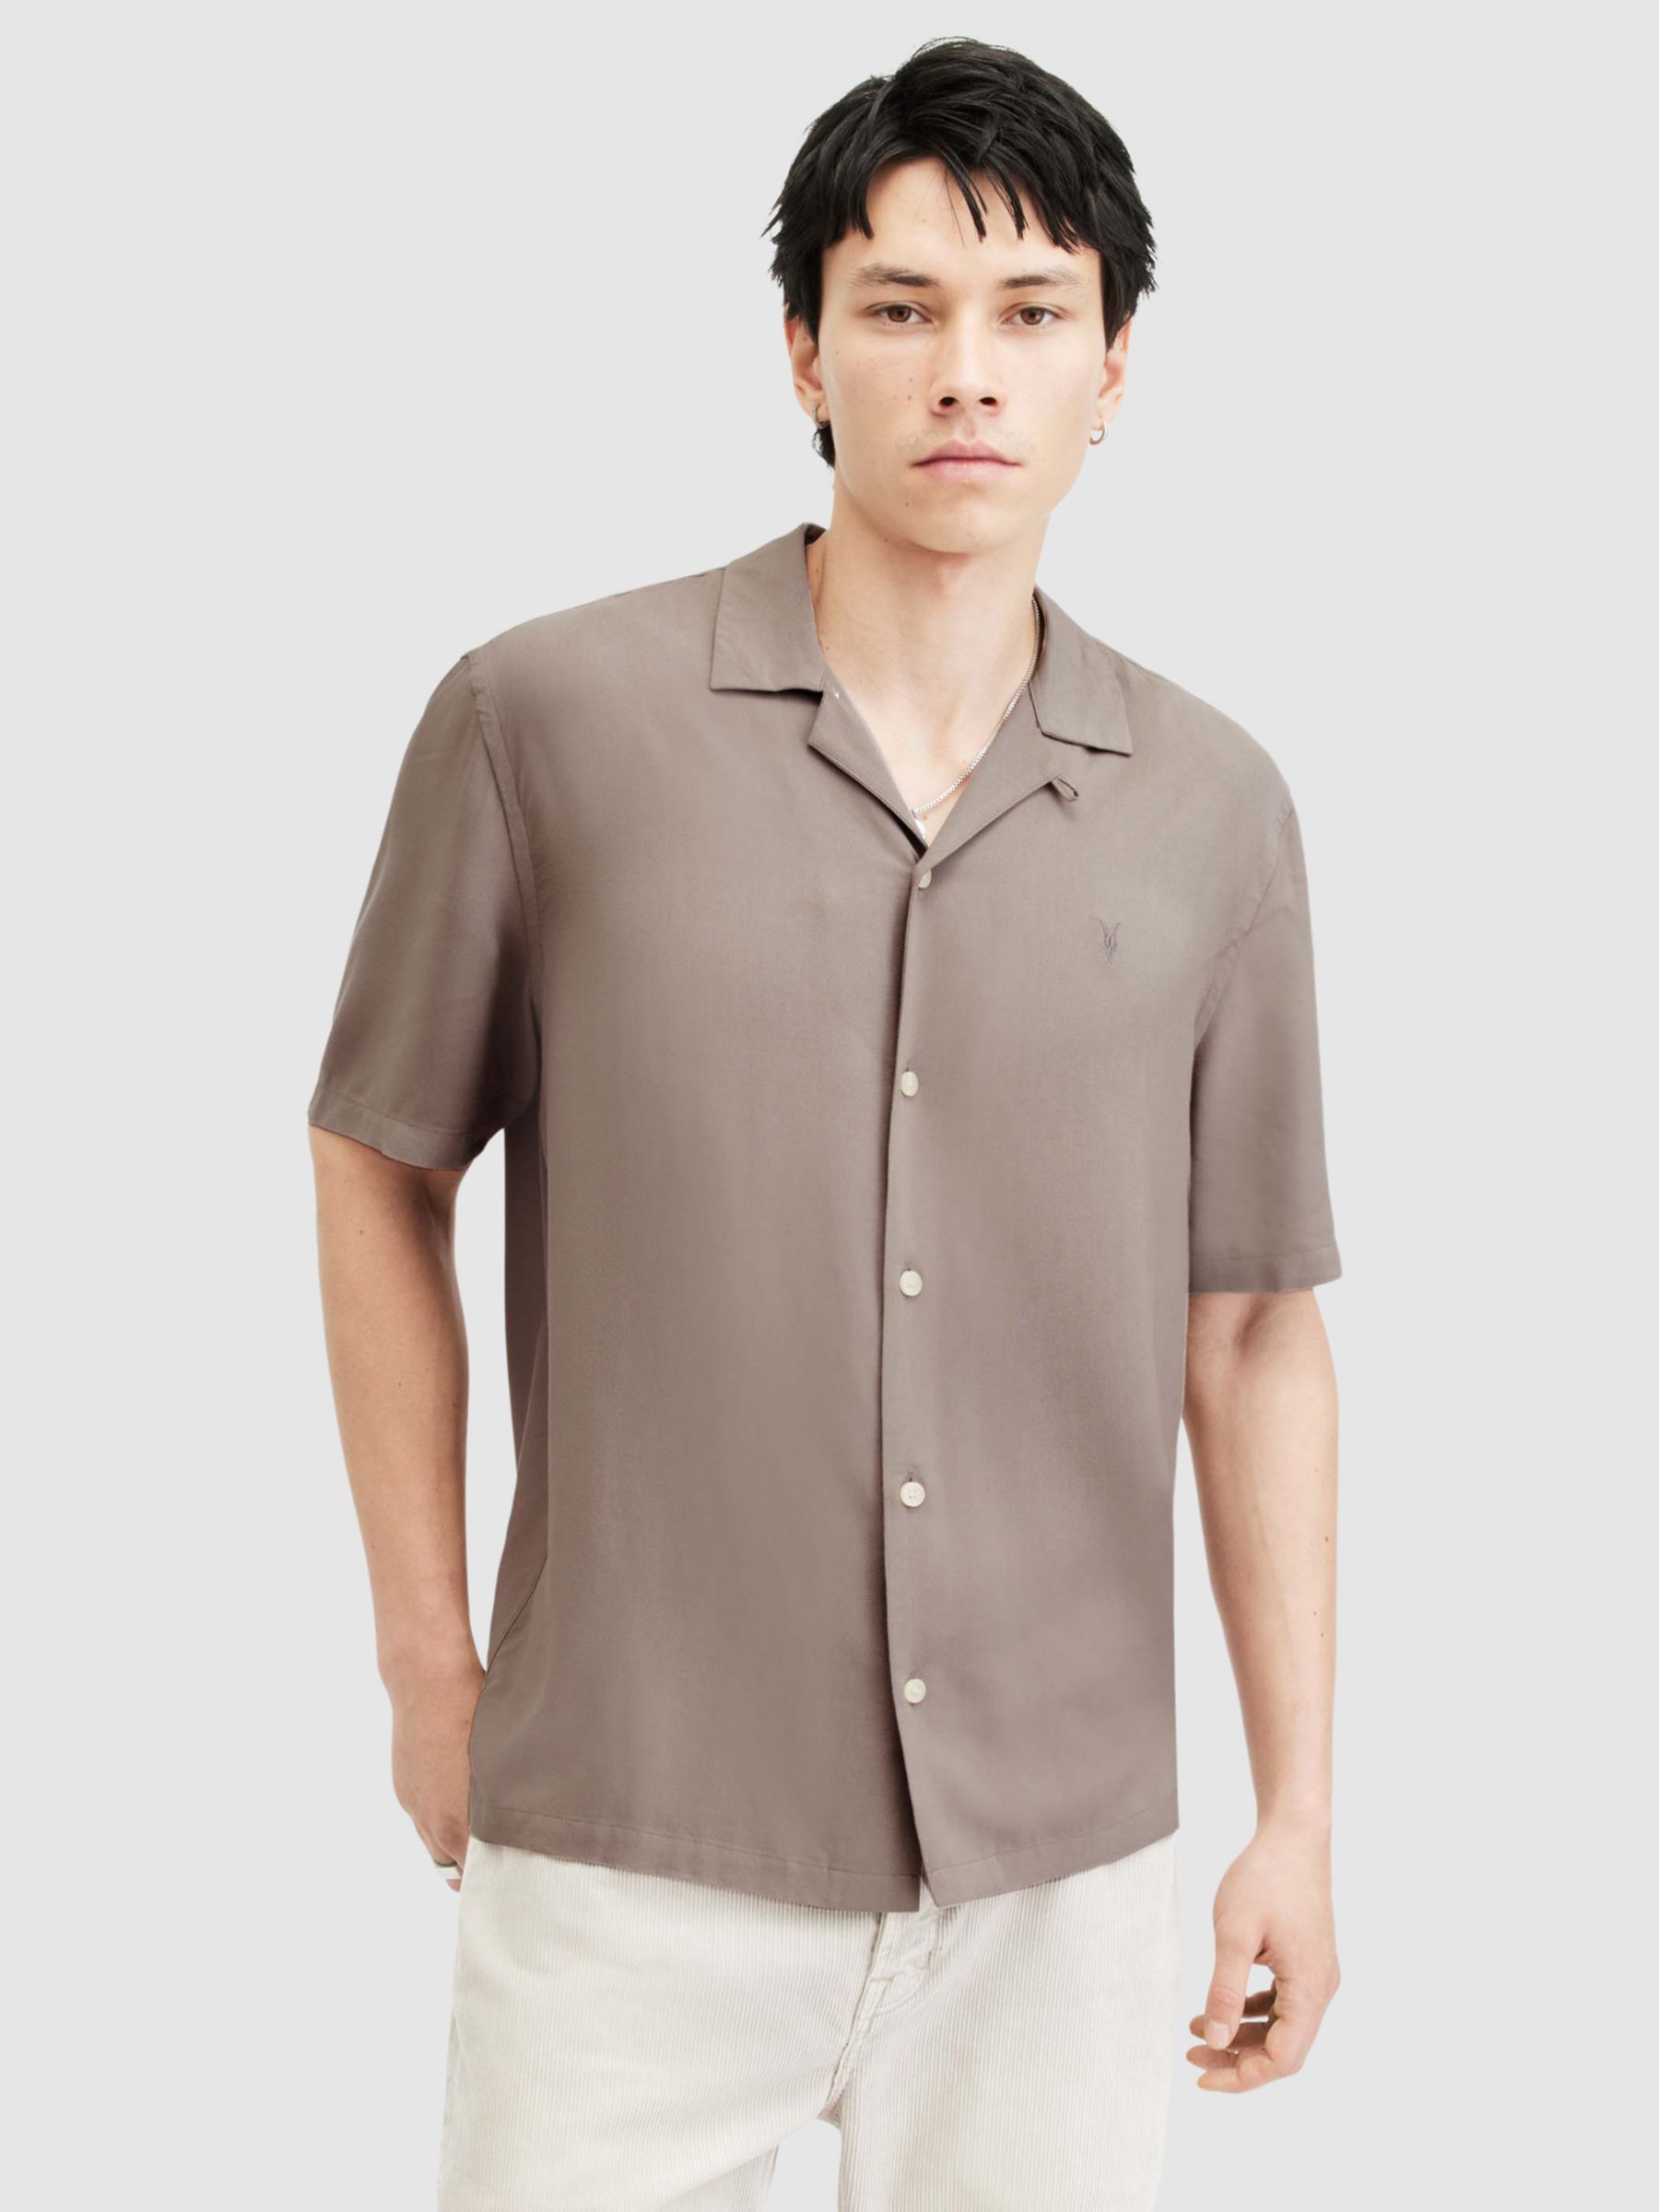 AllSaints Venice Short Sleeved Shirt, Chestnut Brown, L